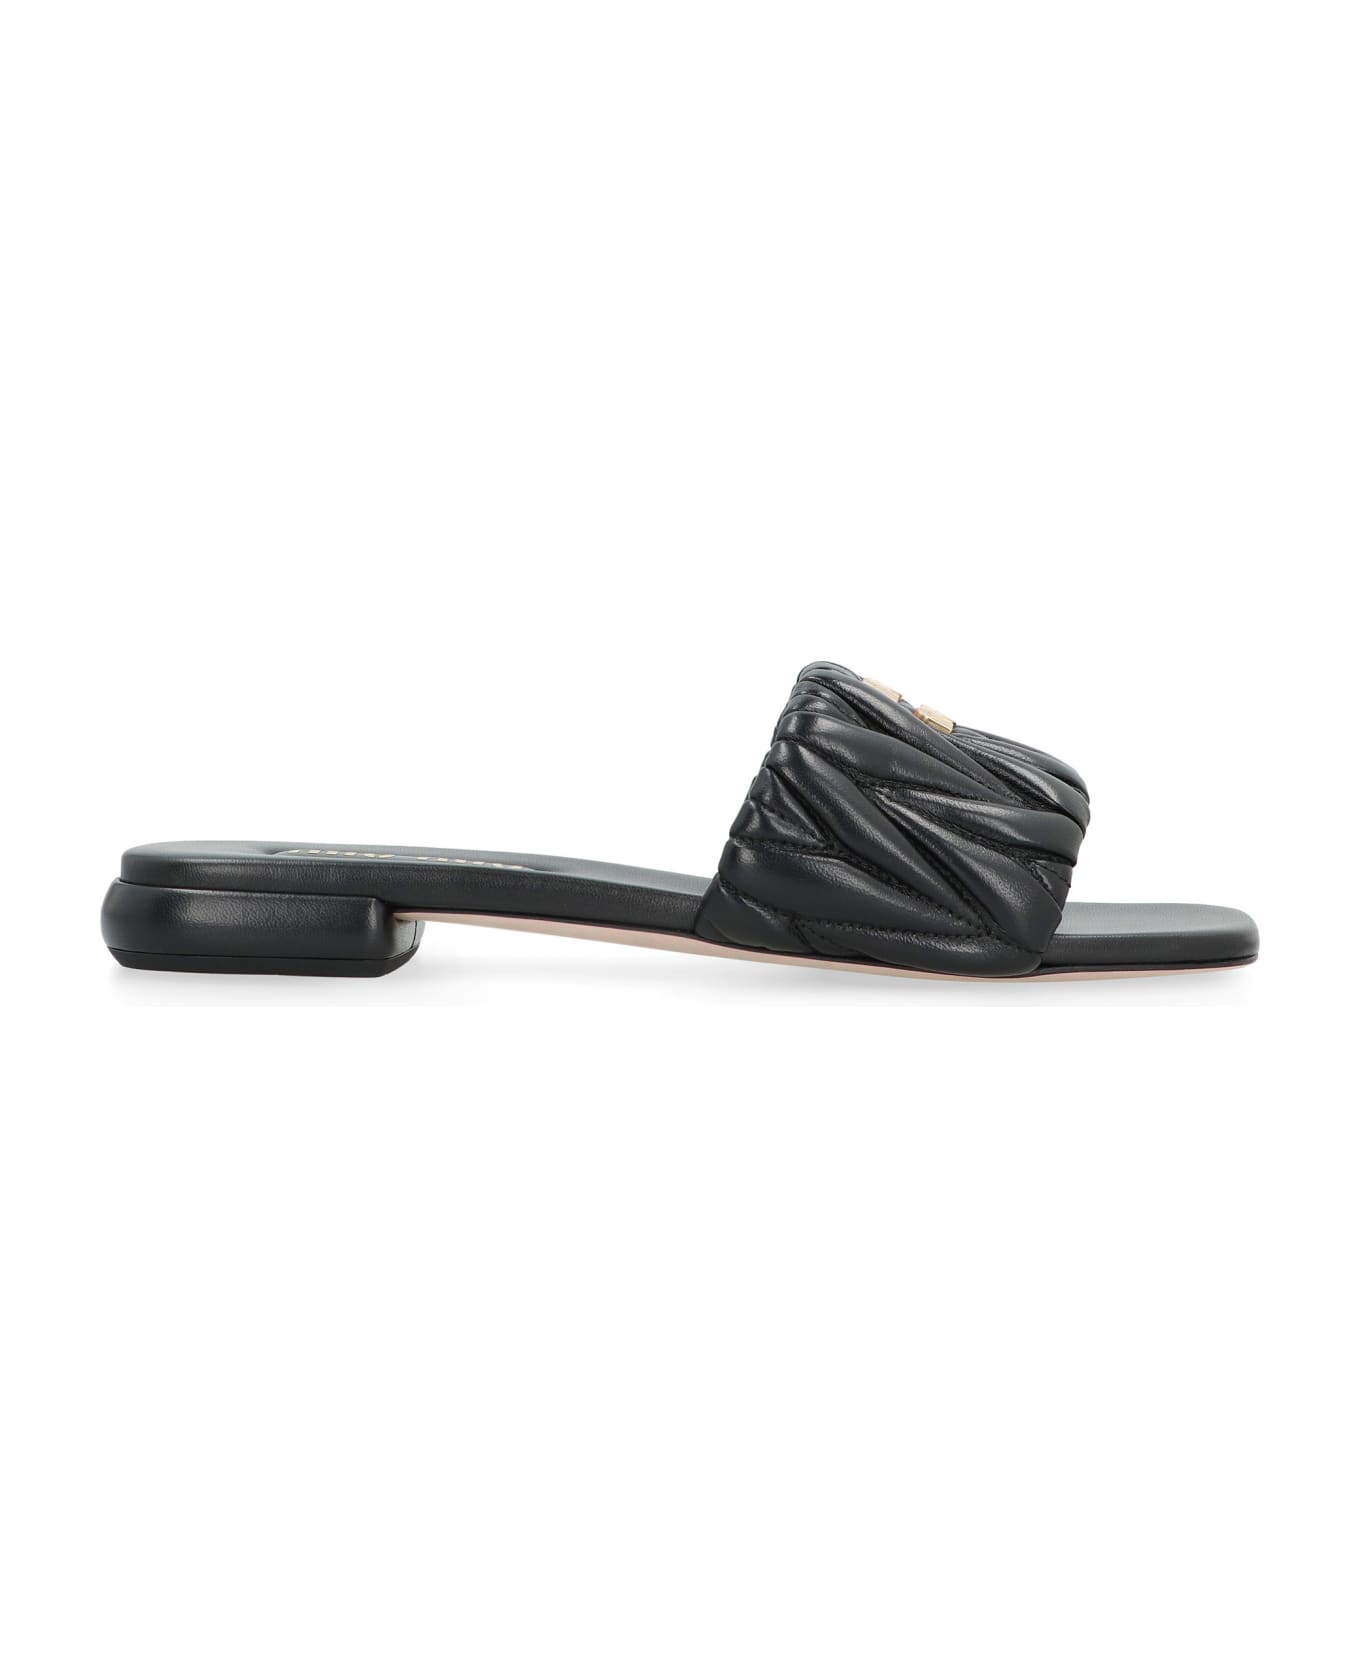 Miu Miu Leather Slides - black サンダル